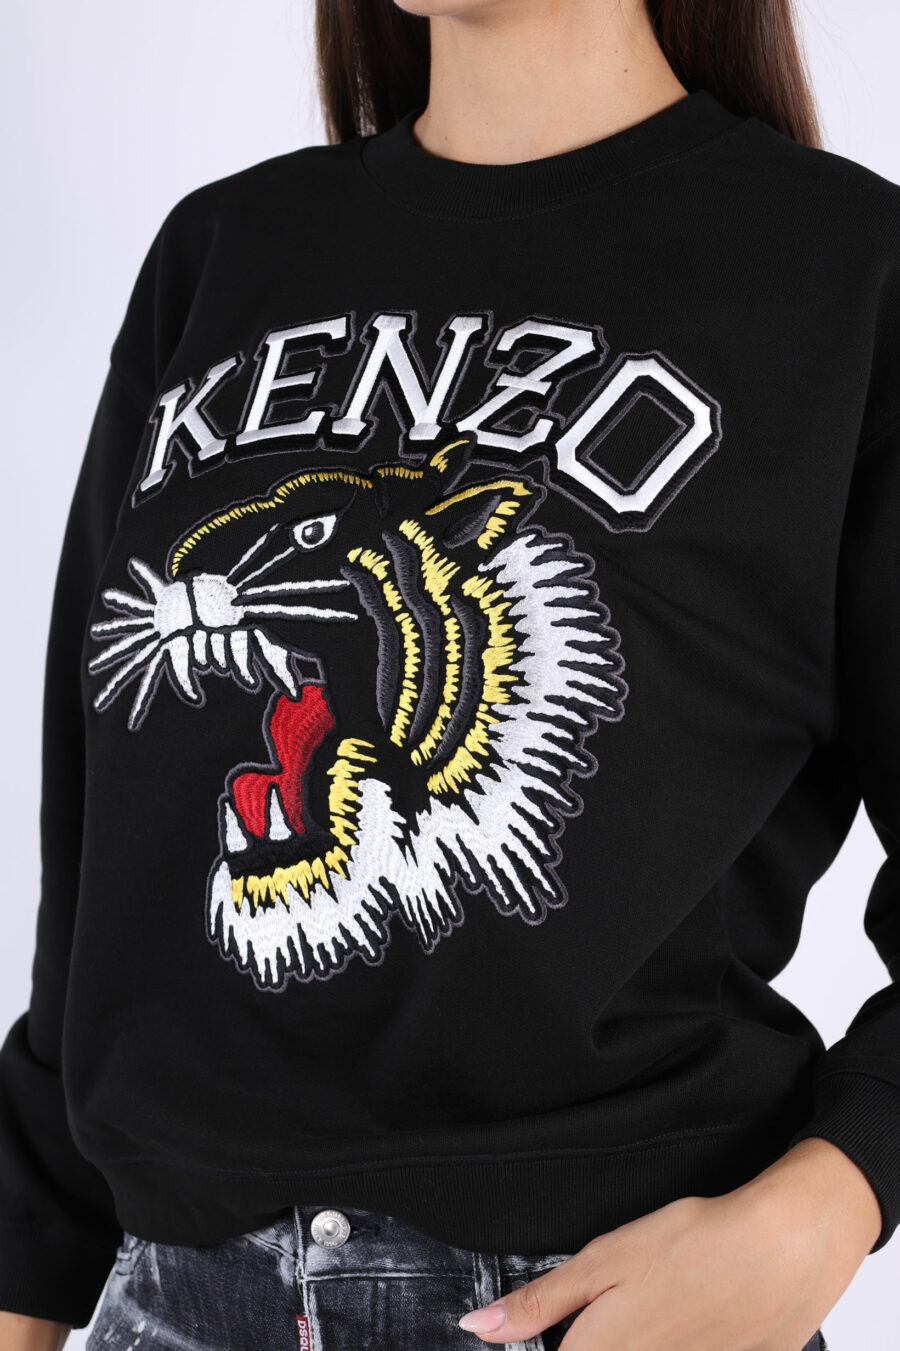 Black sweatshirt with embroidered "tiger" logo - 361223054662201659